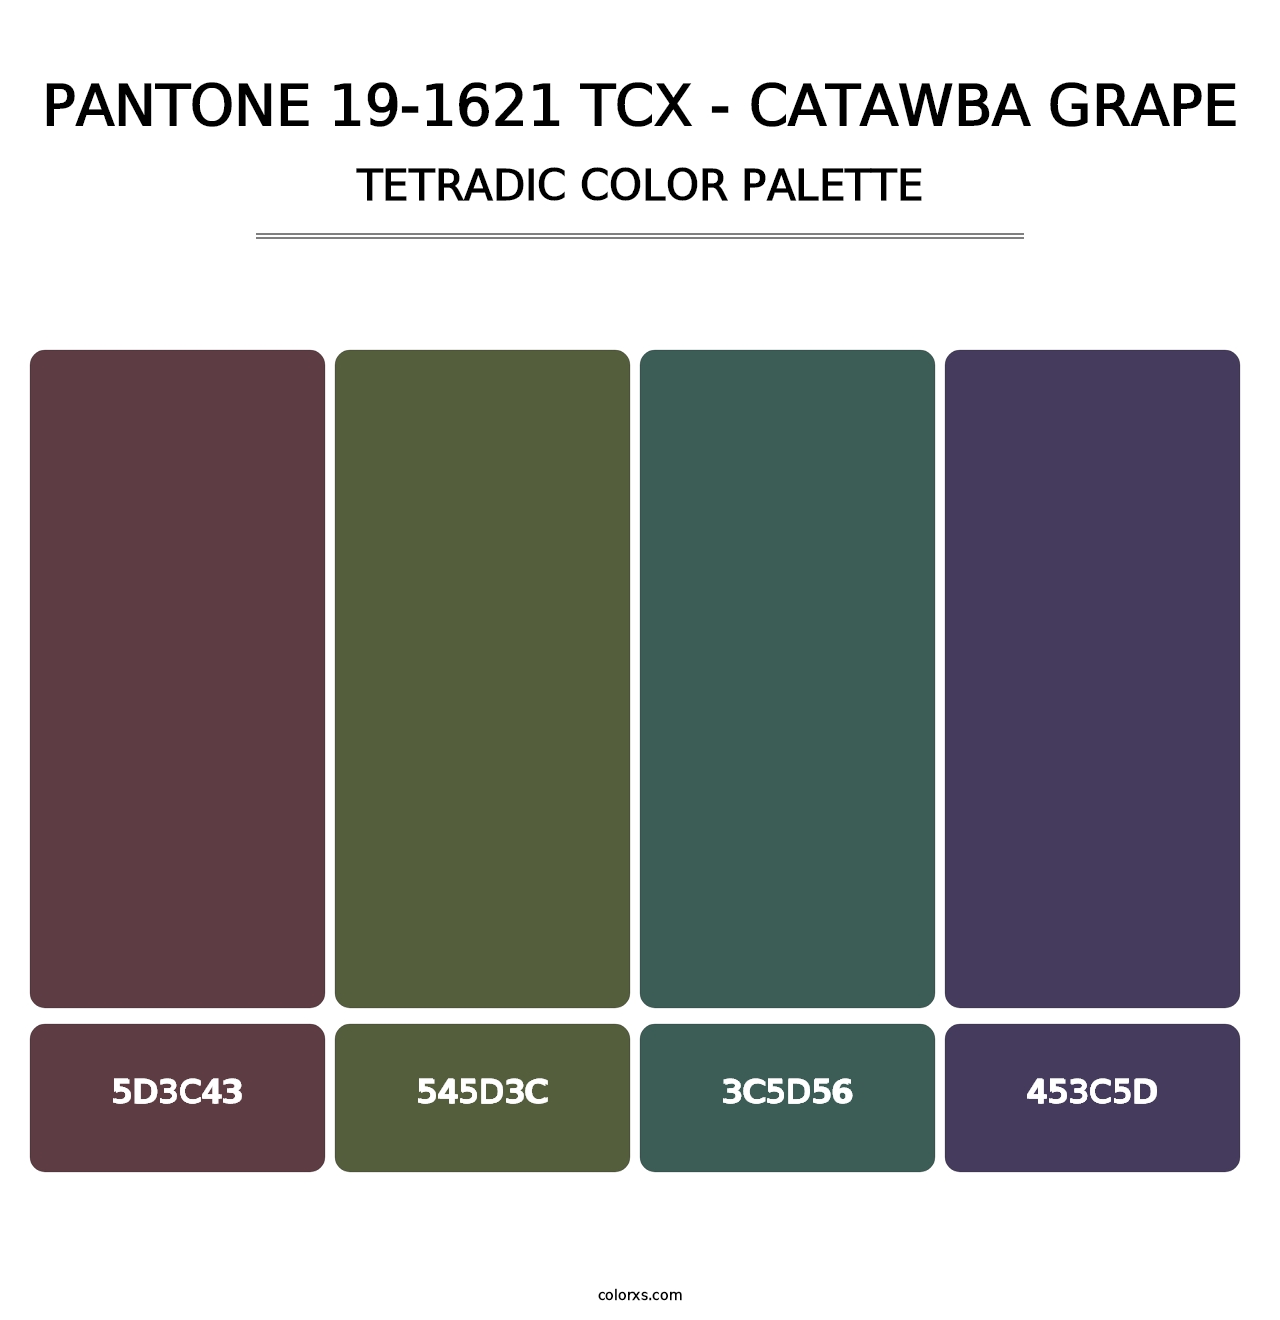 PANTONE 19-1621 TCX - Catawba Grape - Tetradic Color Palette